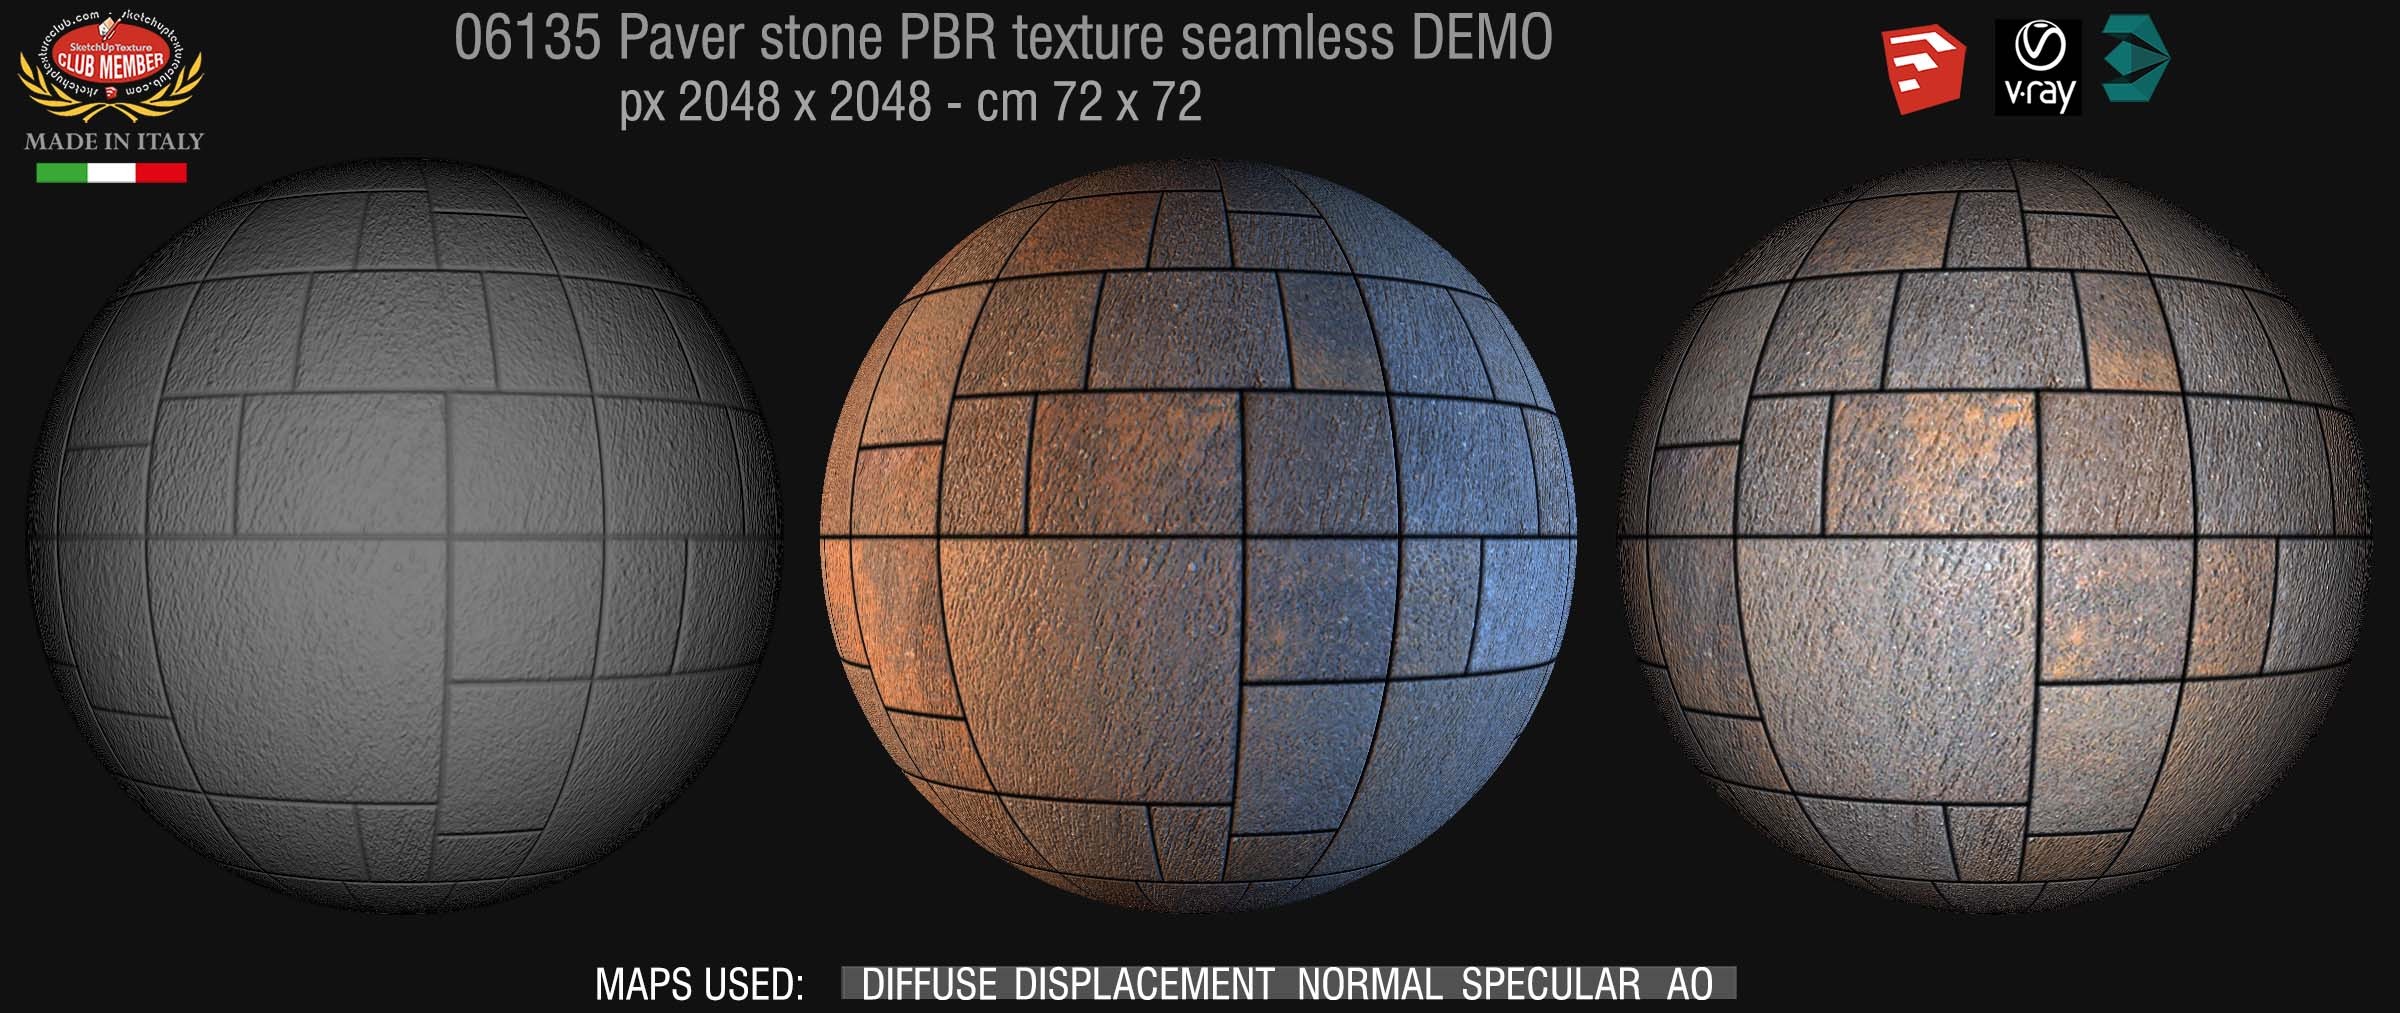 06135 paver stone PBR texture seamless DEMO